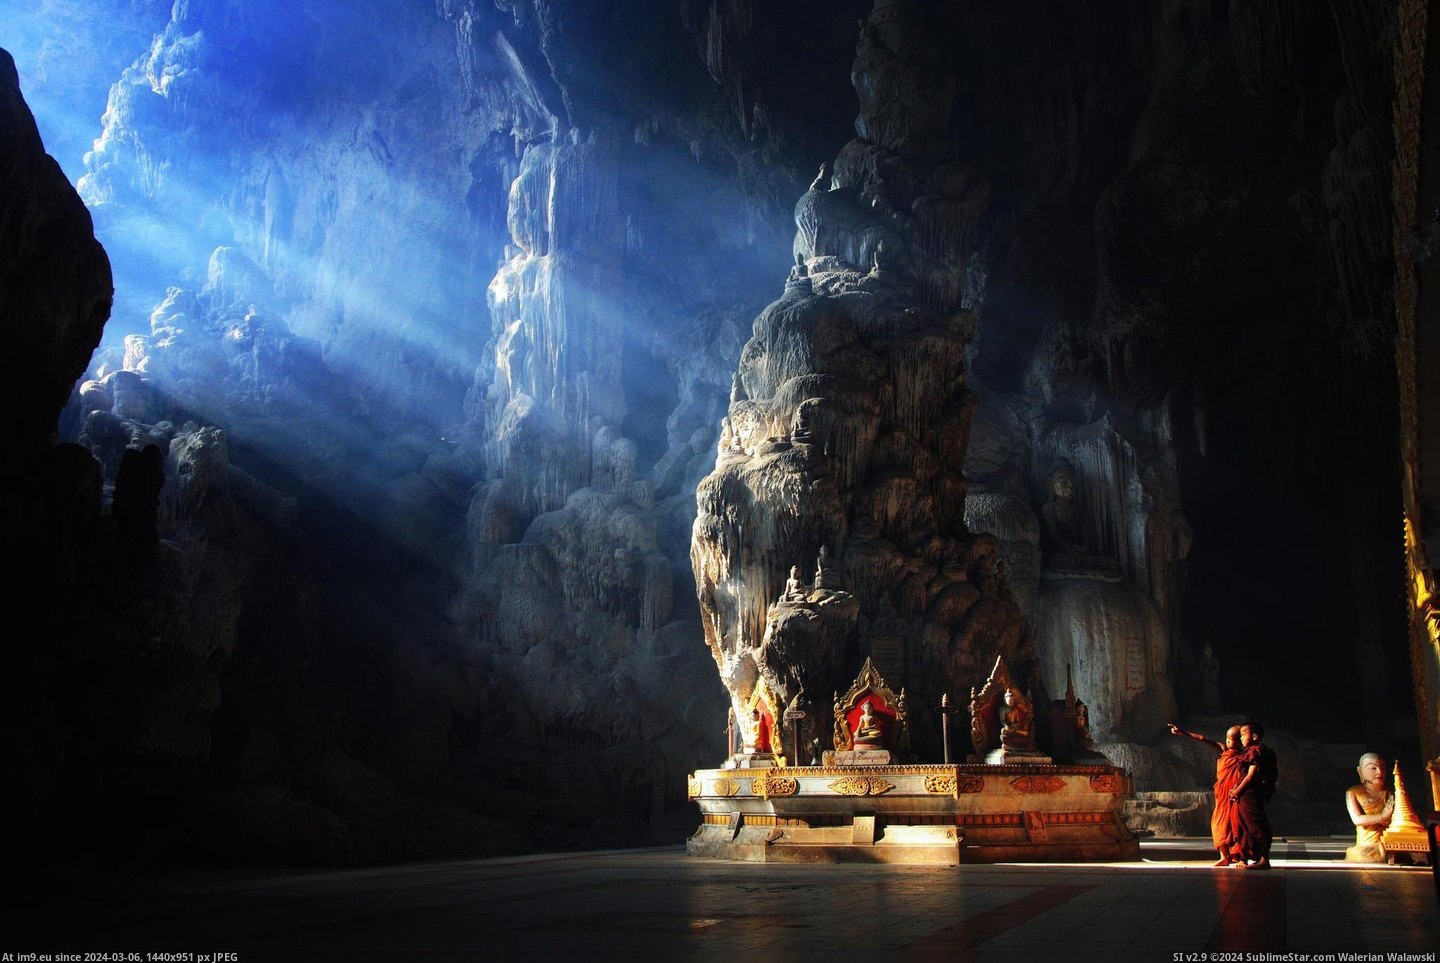 #Cave #Buddhist #Temple [Pics] A Buddhist temple inside a cave. Pic. (Bild von album My r/PICS favs))